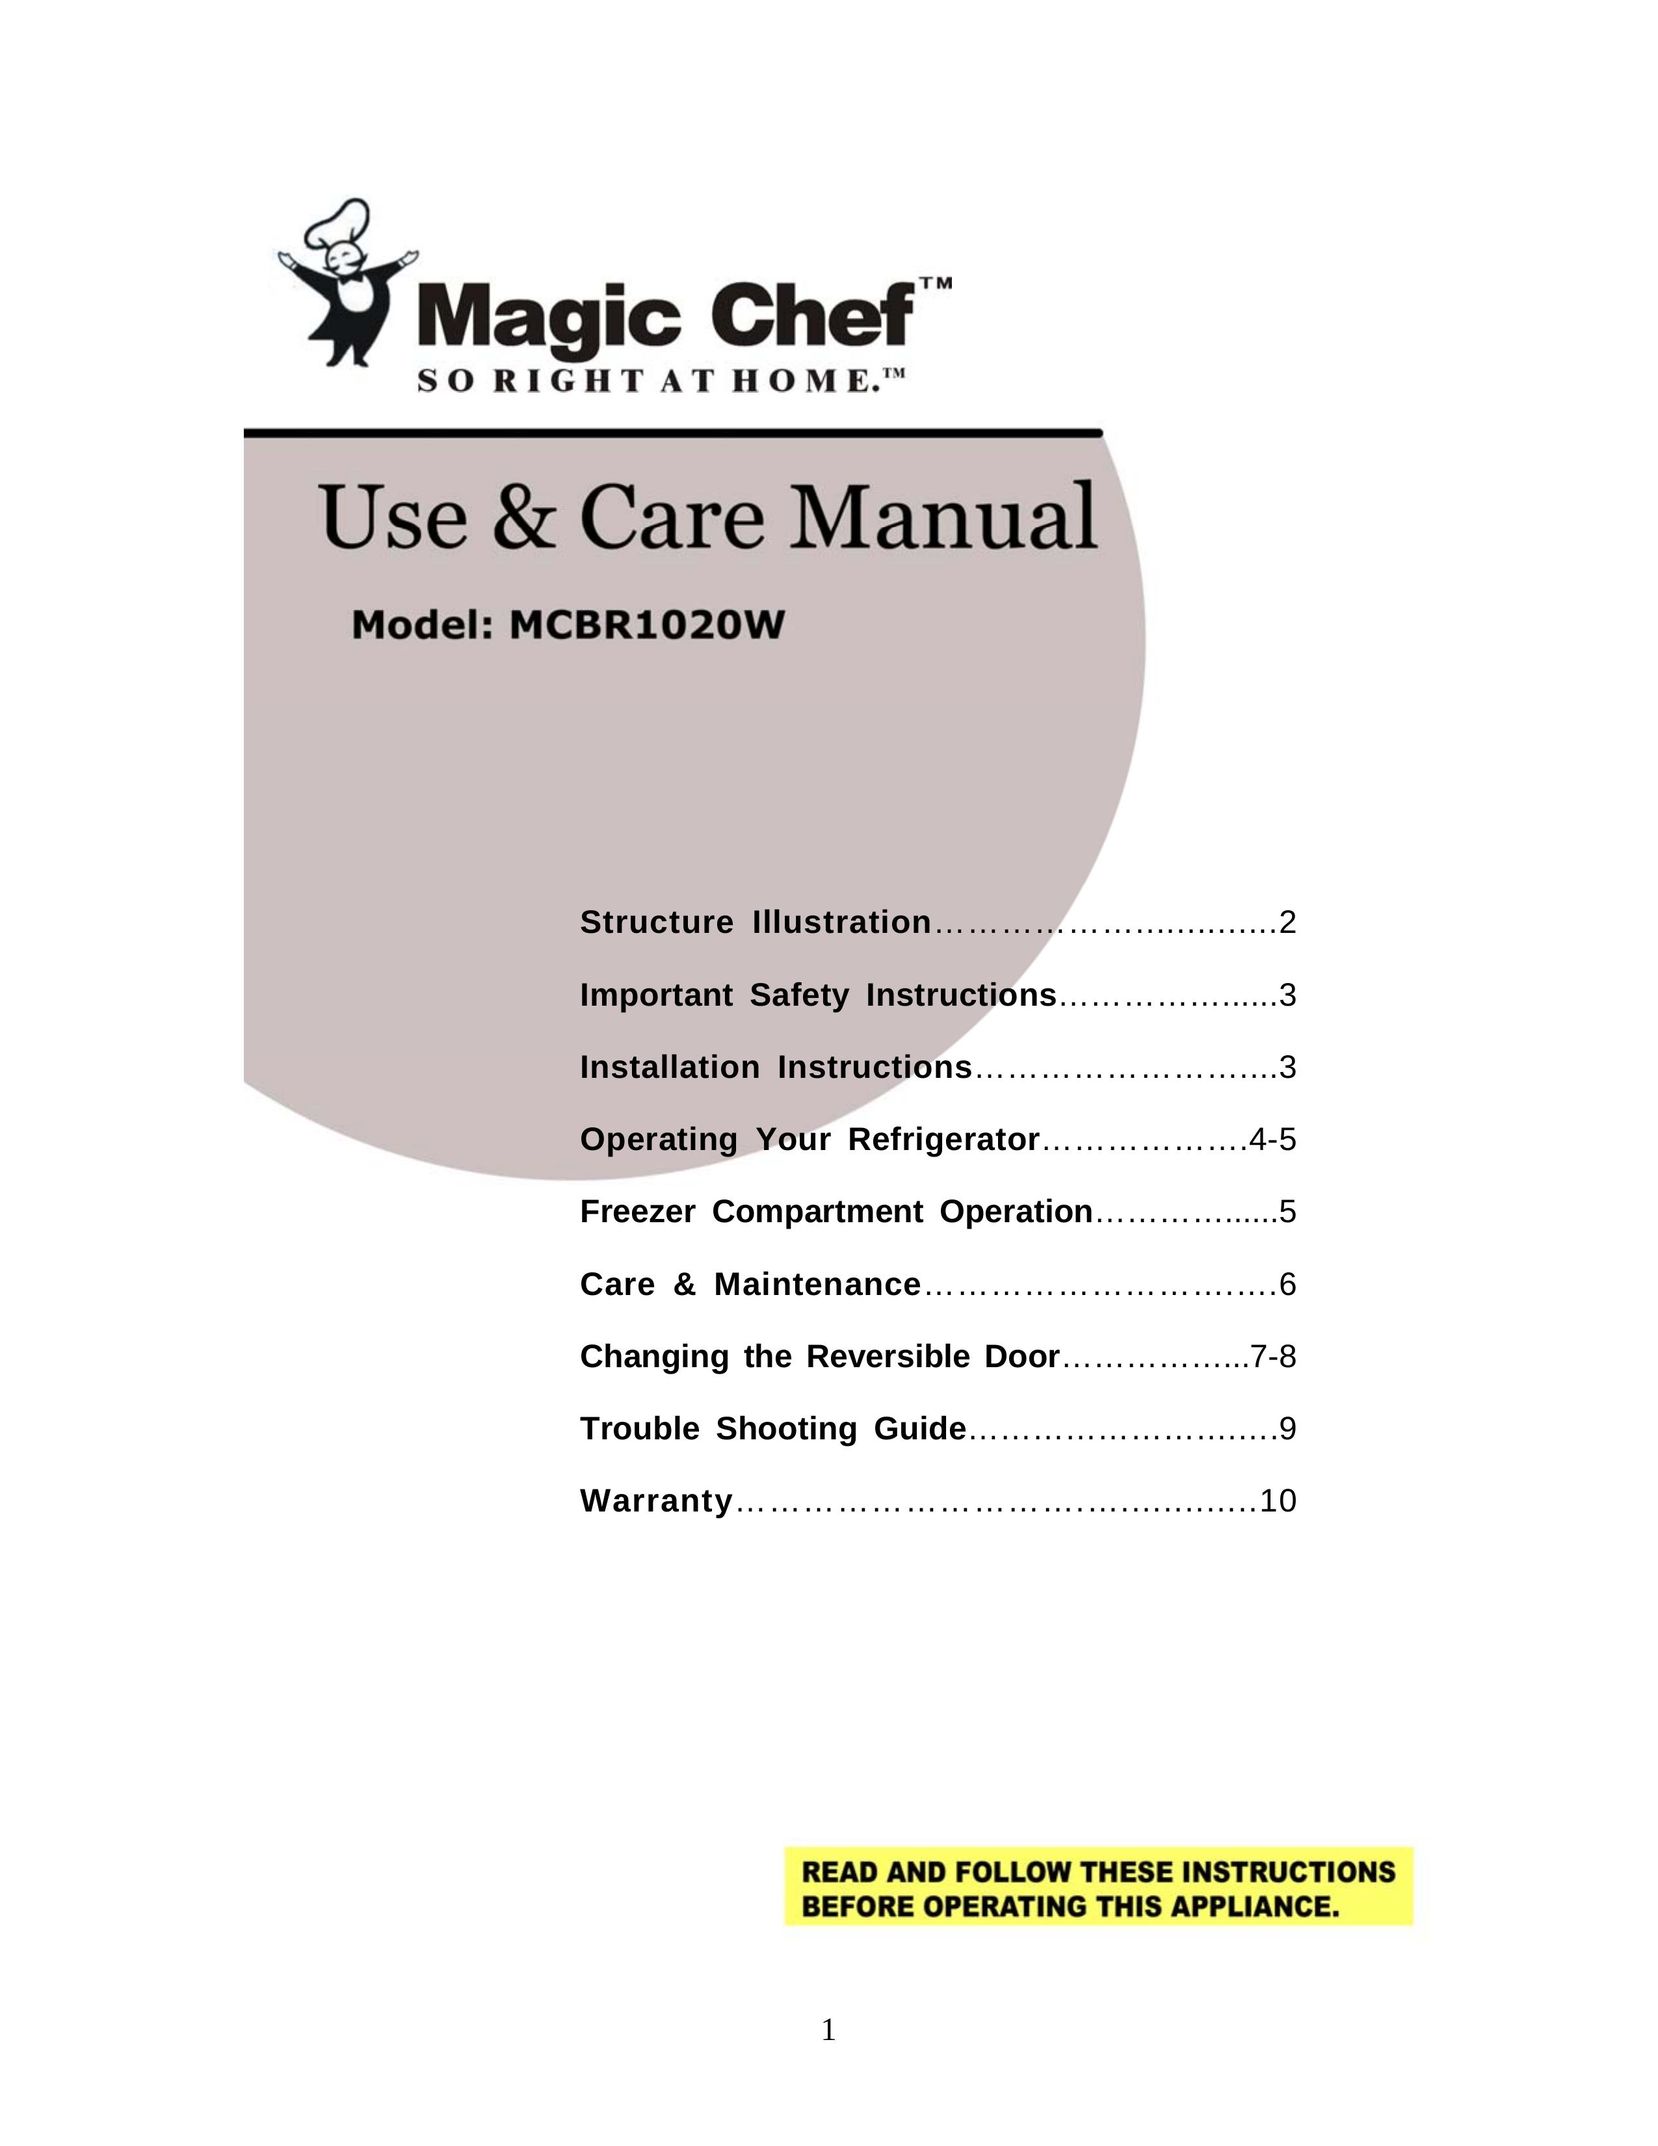 Magic Chef MCBR1020W Food Processor User Manual